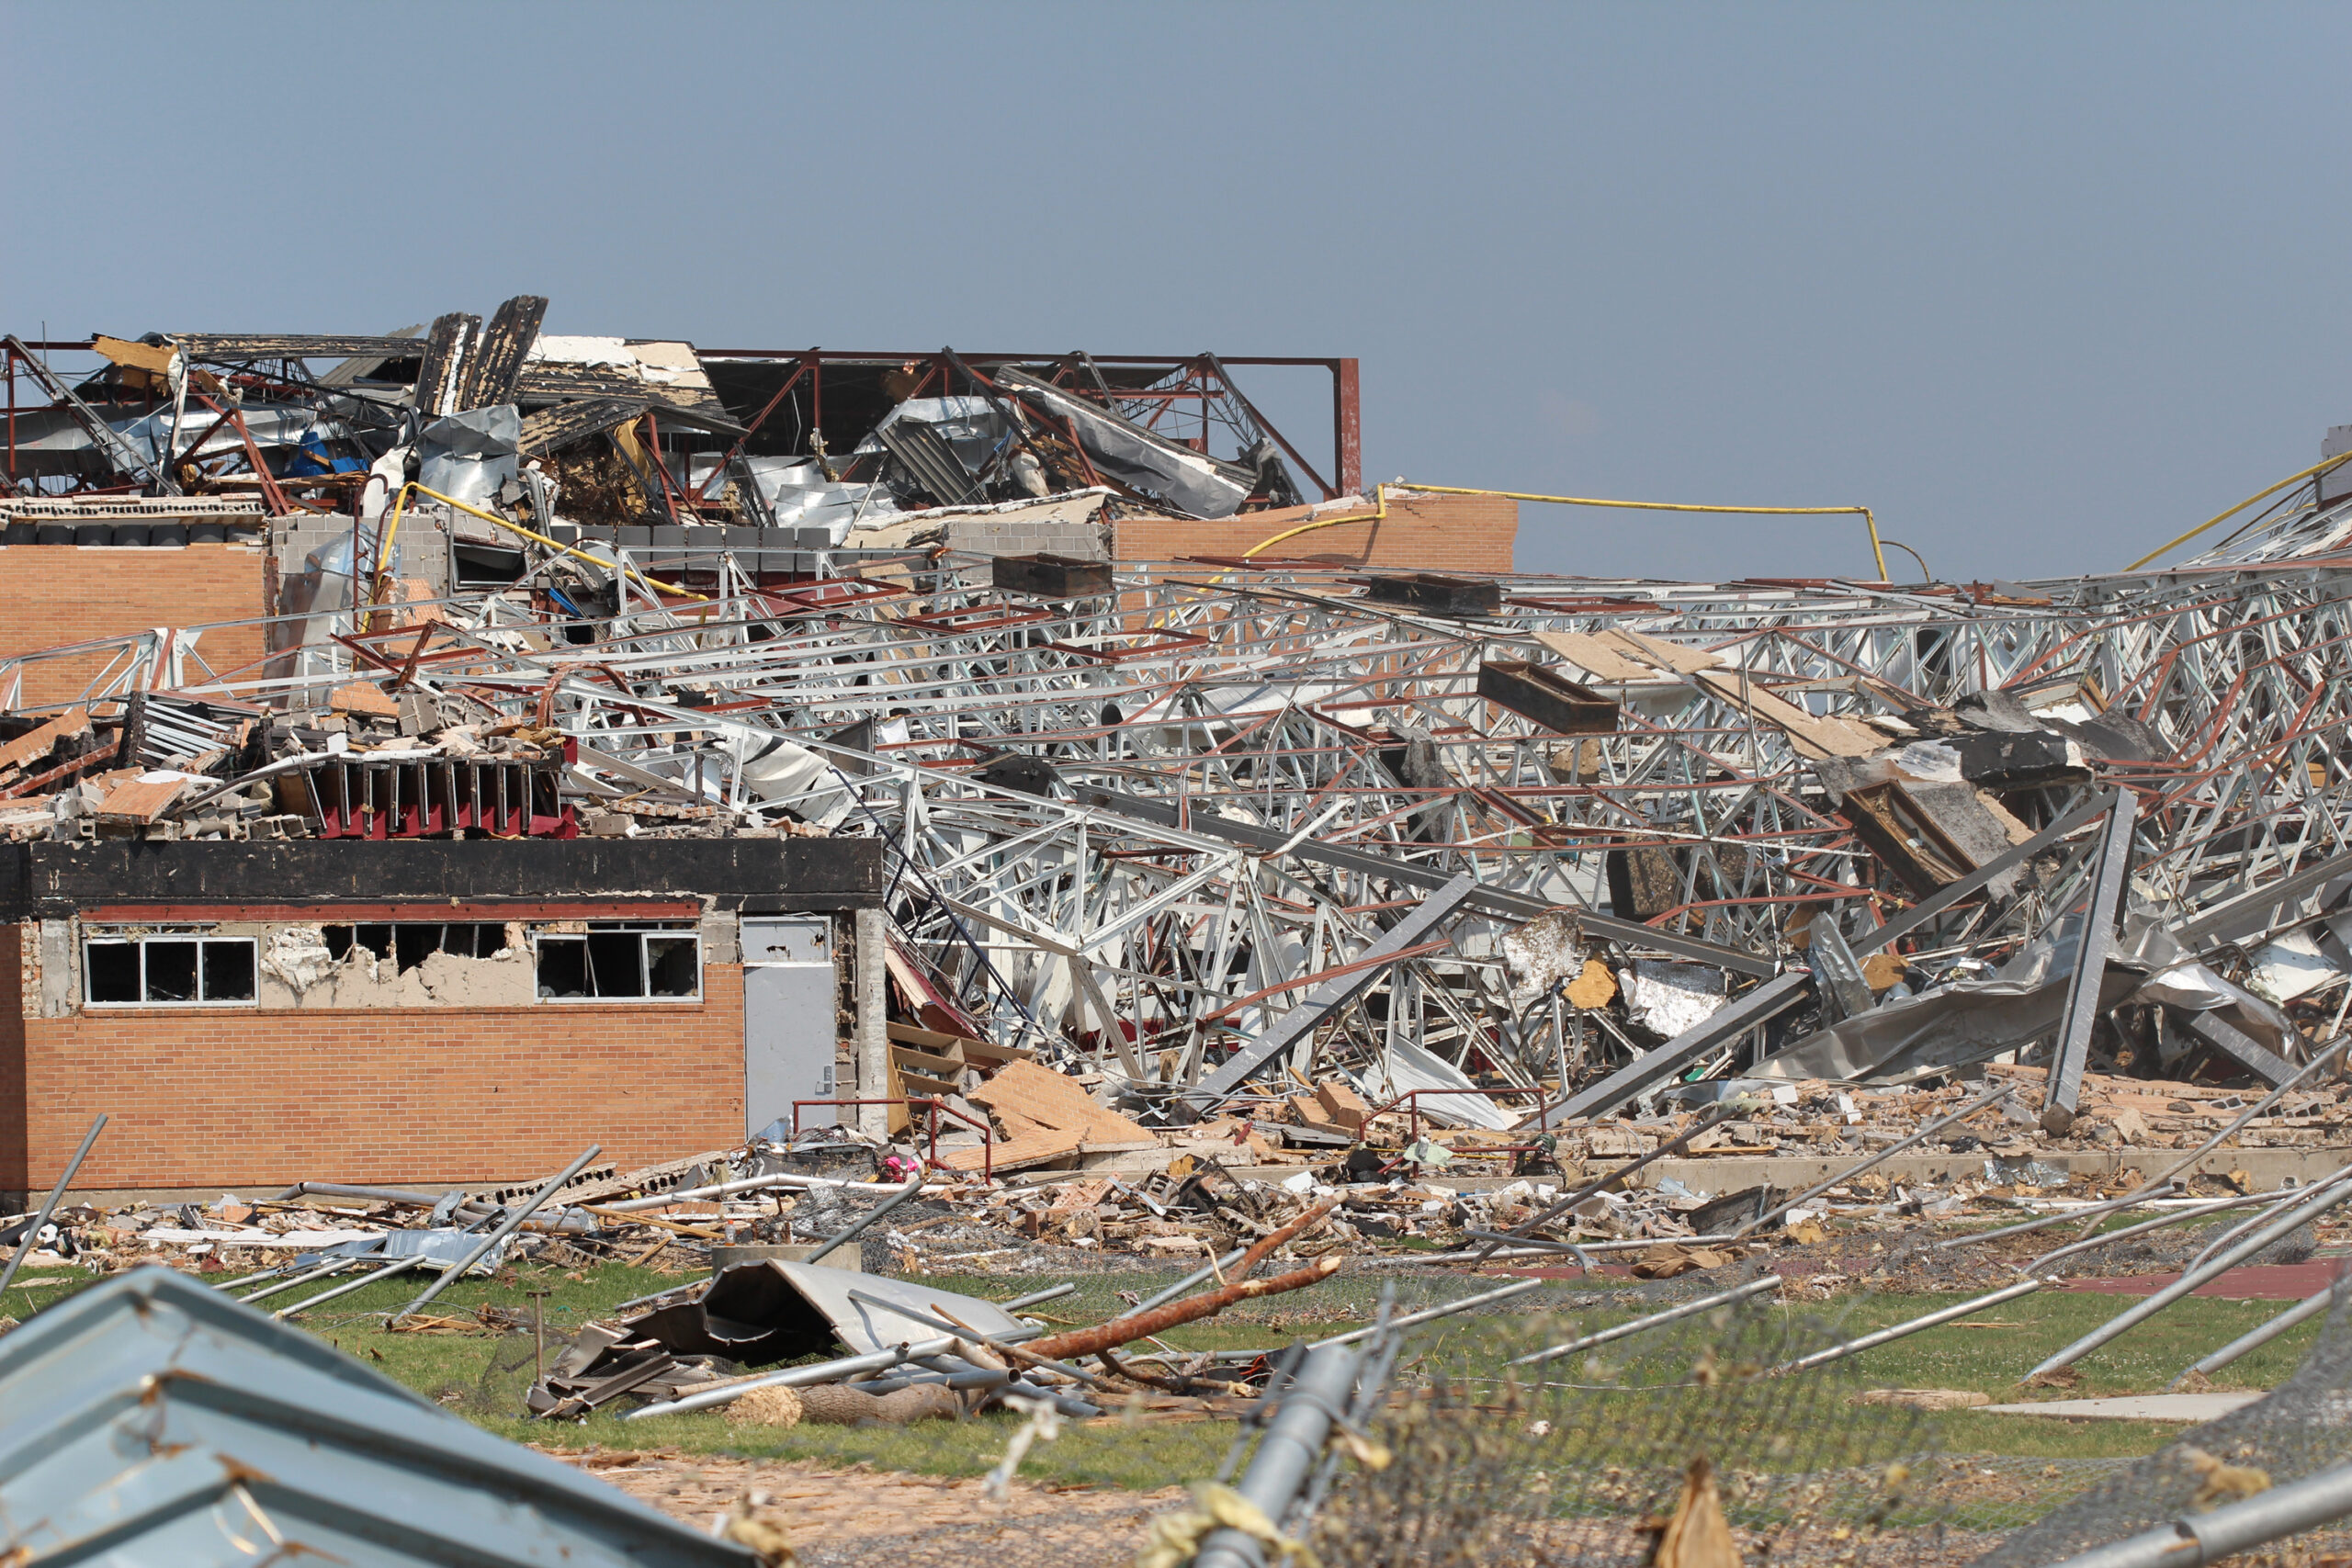 A huge pile of rubble left behind after an EF5 tornado.